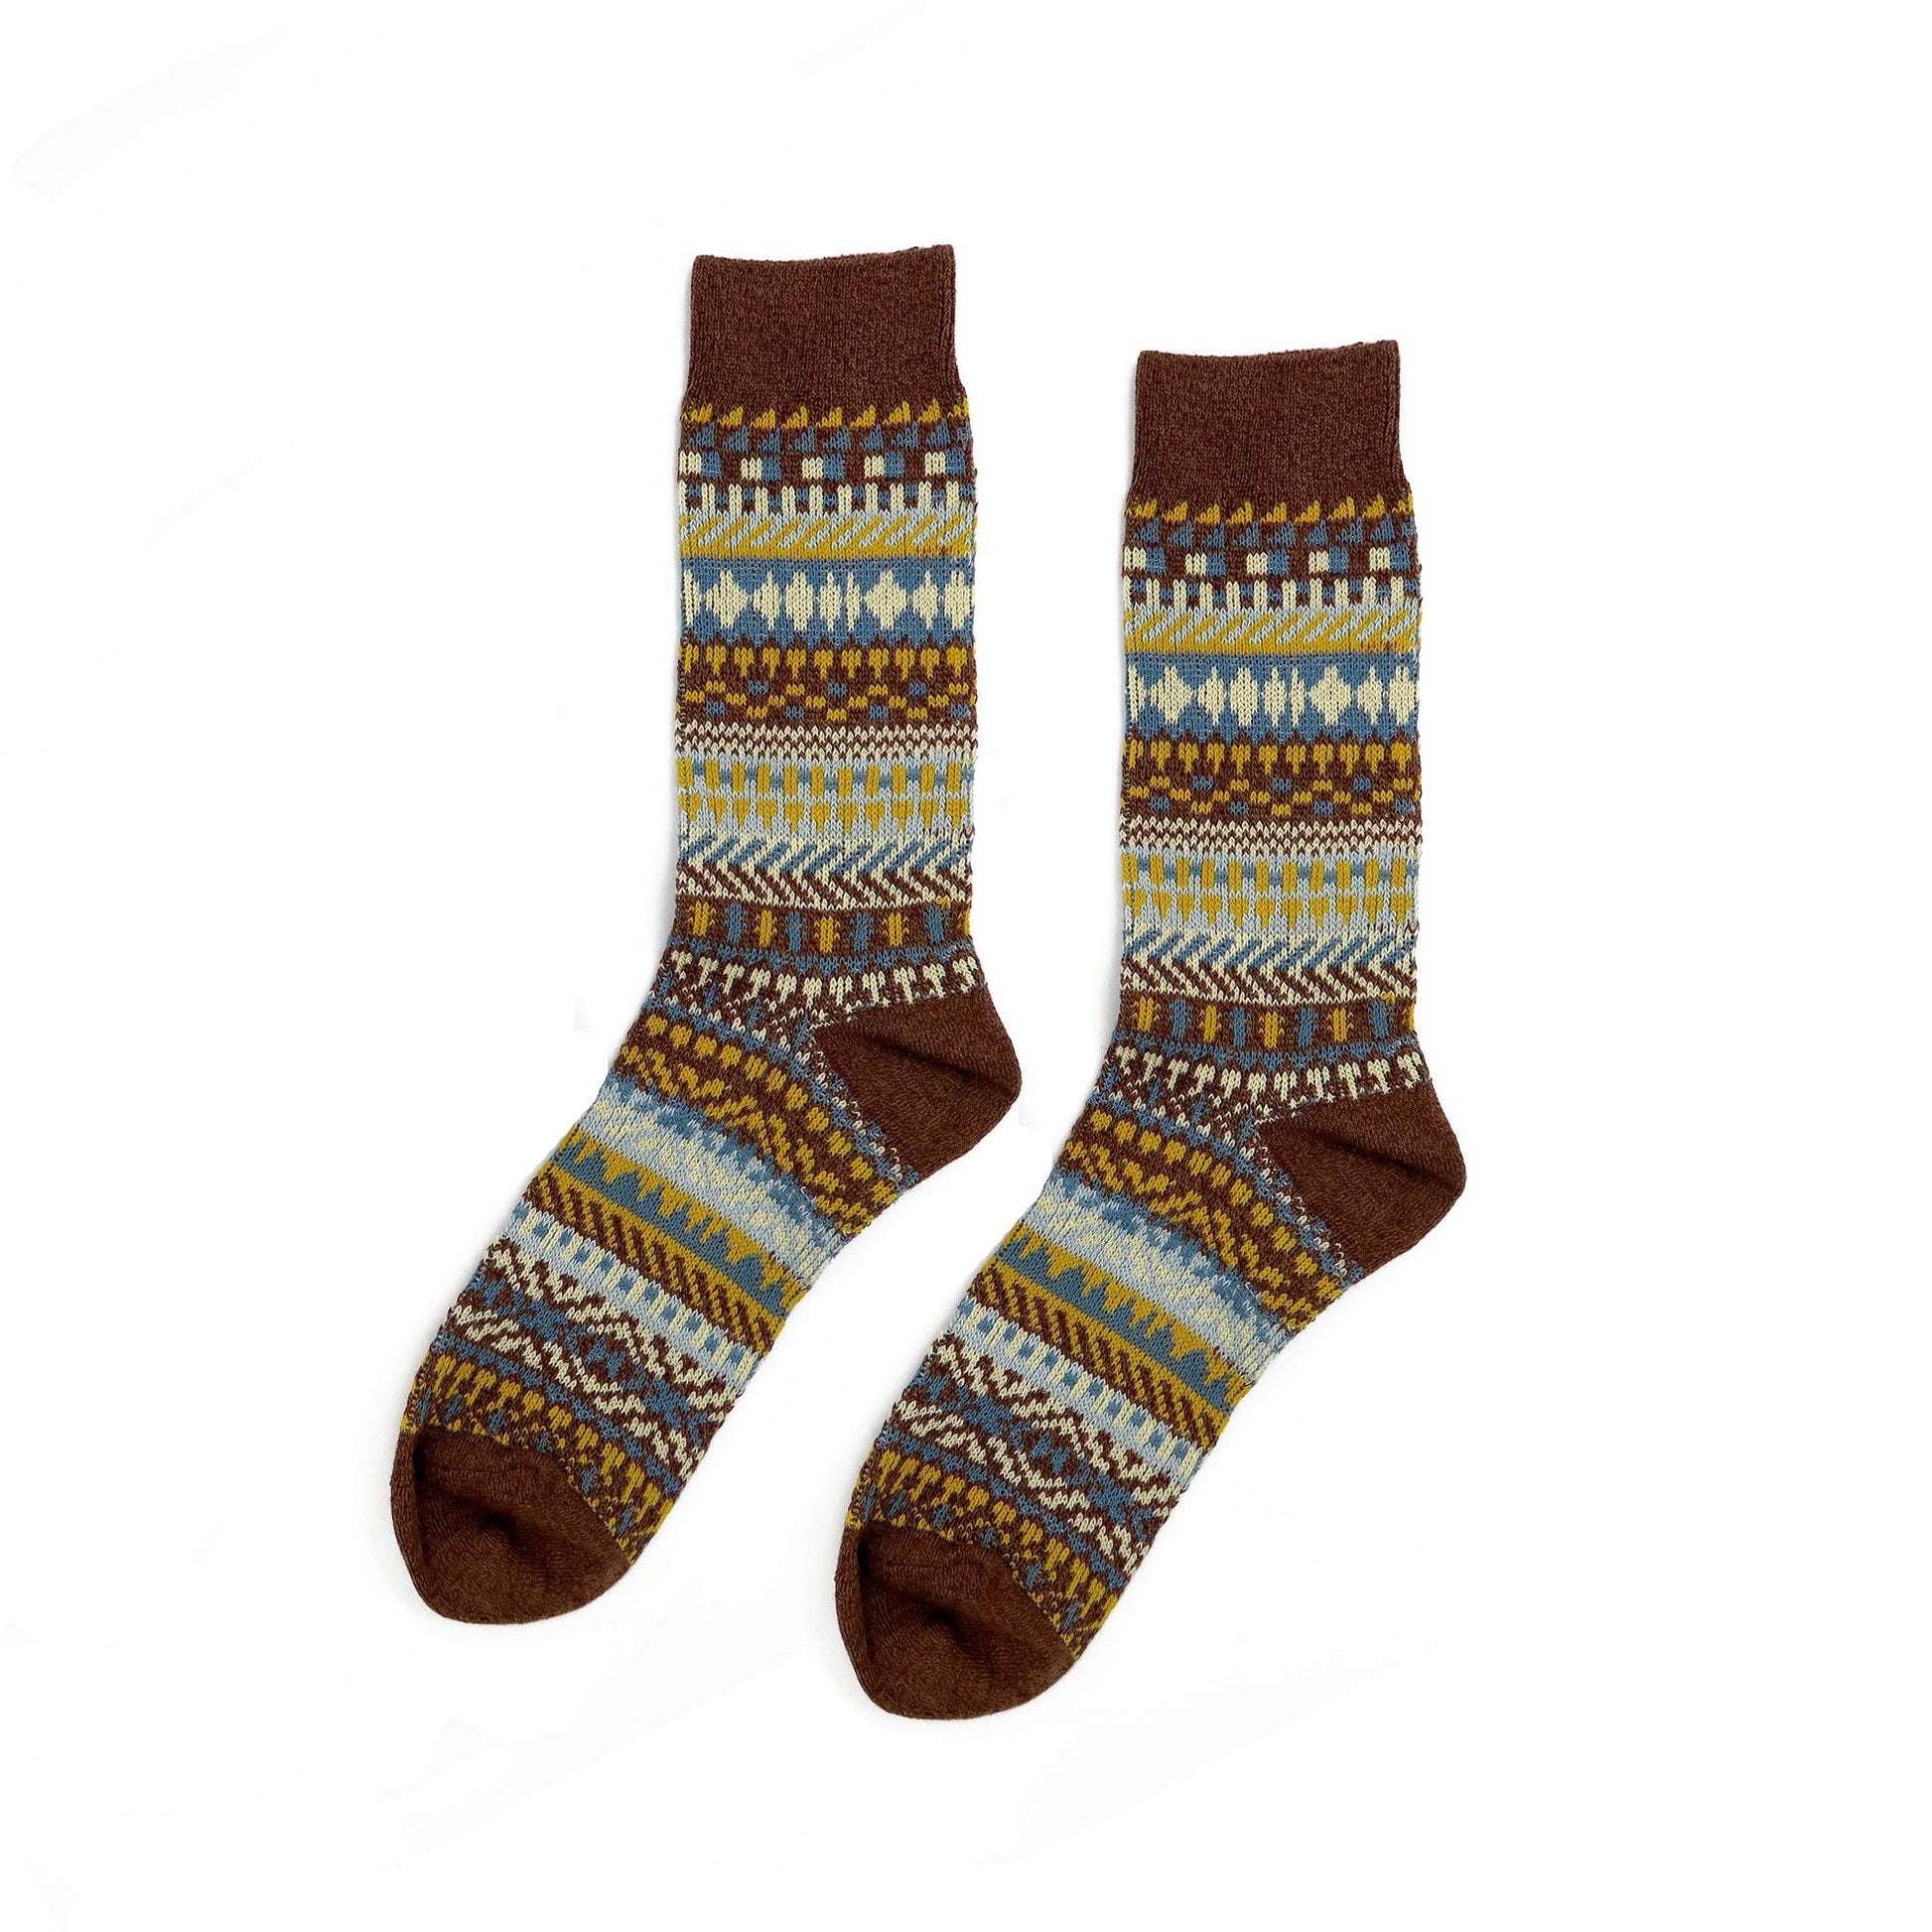 kizune socks - brown tribal pattern socks - comfysocks